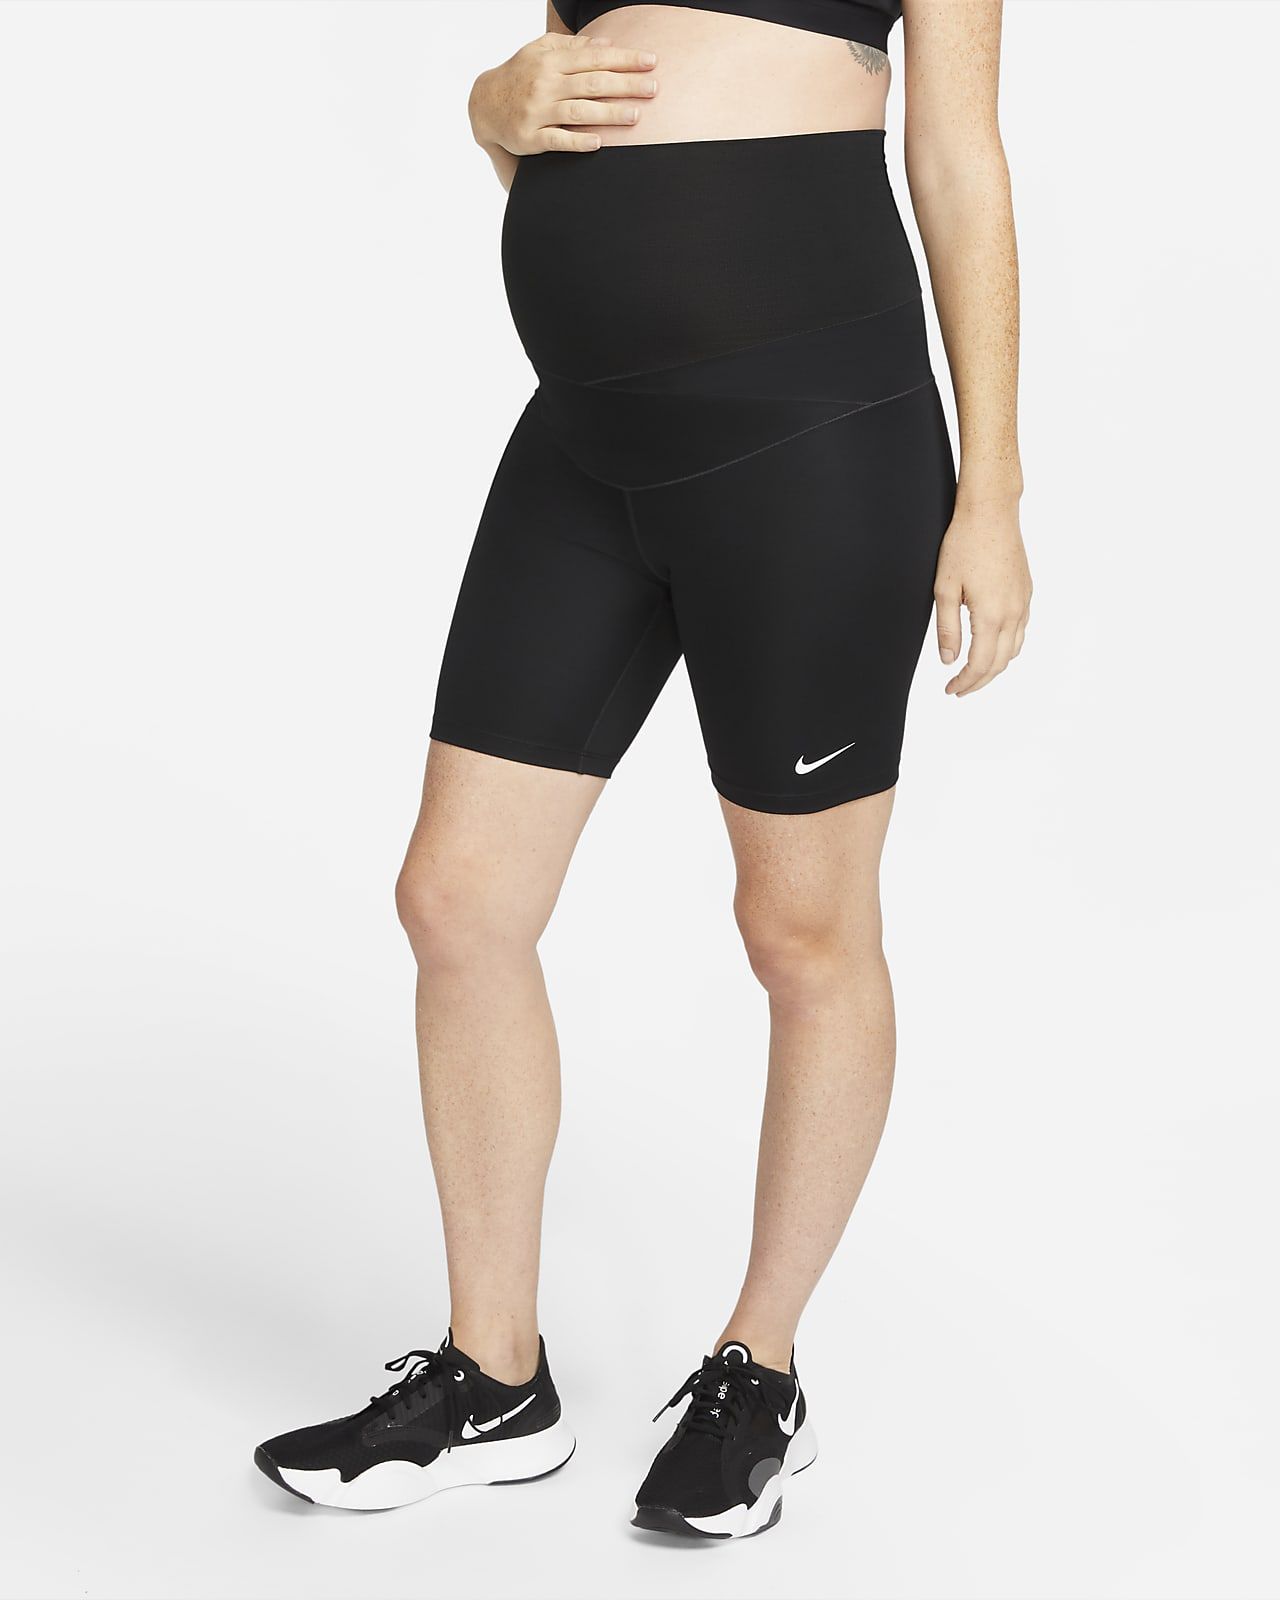 Cycliste Nike One (M) 18 cm pour femme (maternité). Nike FR | Nike (FR)